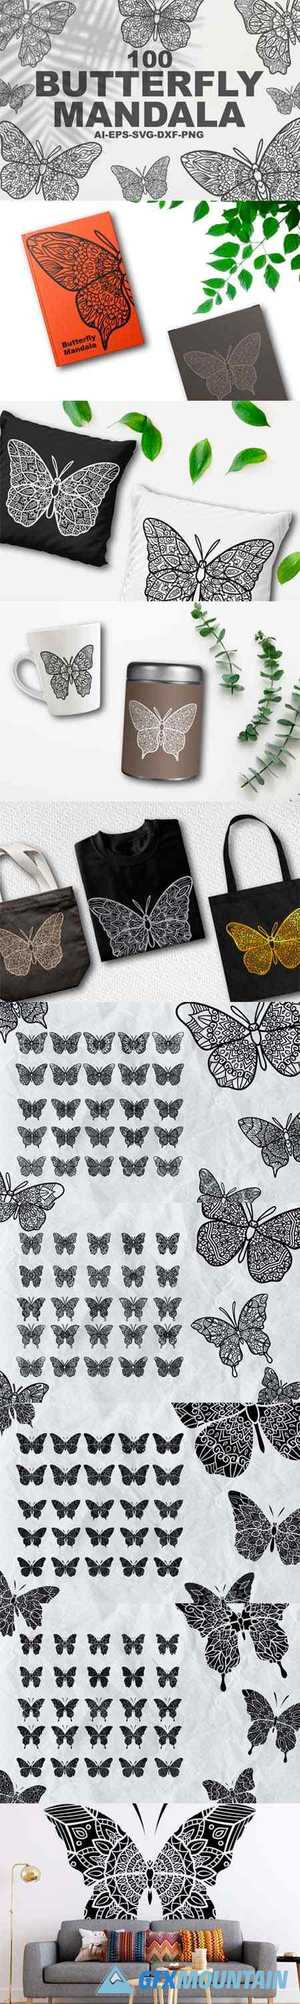 Butterfly Mandalas 3975471